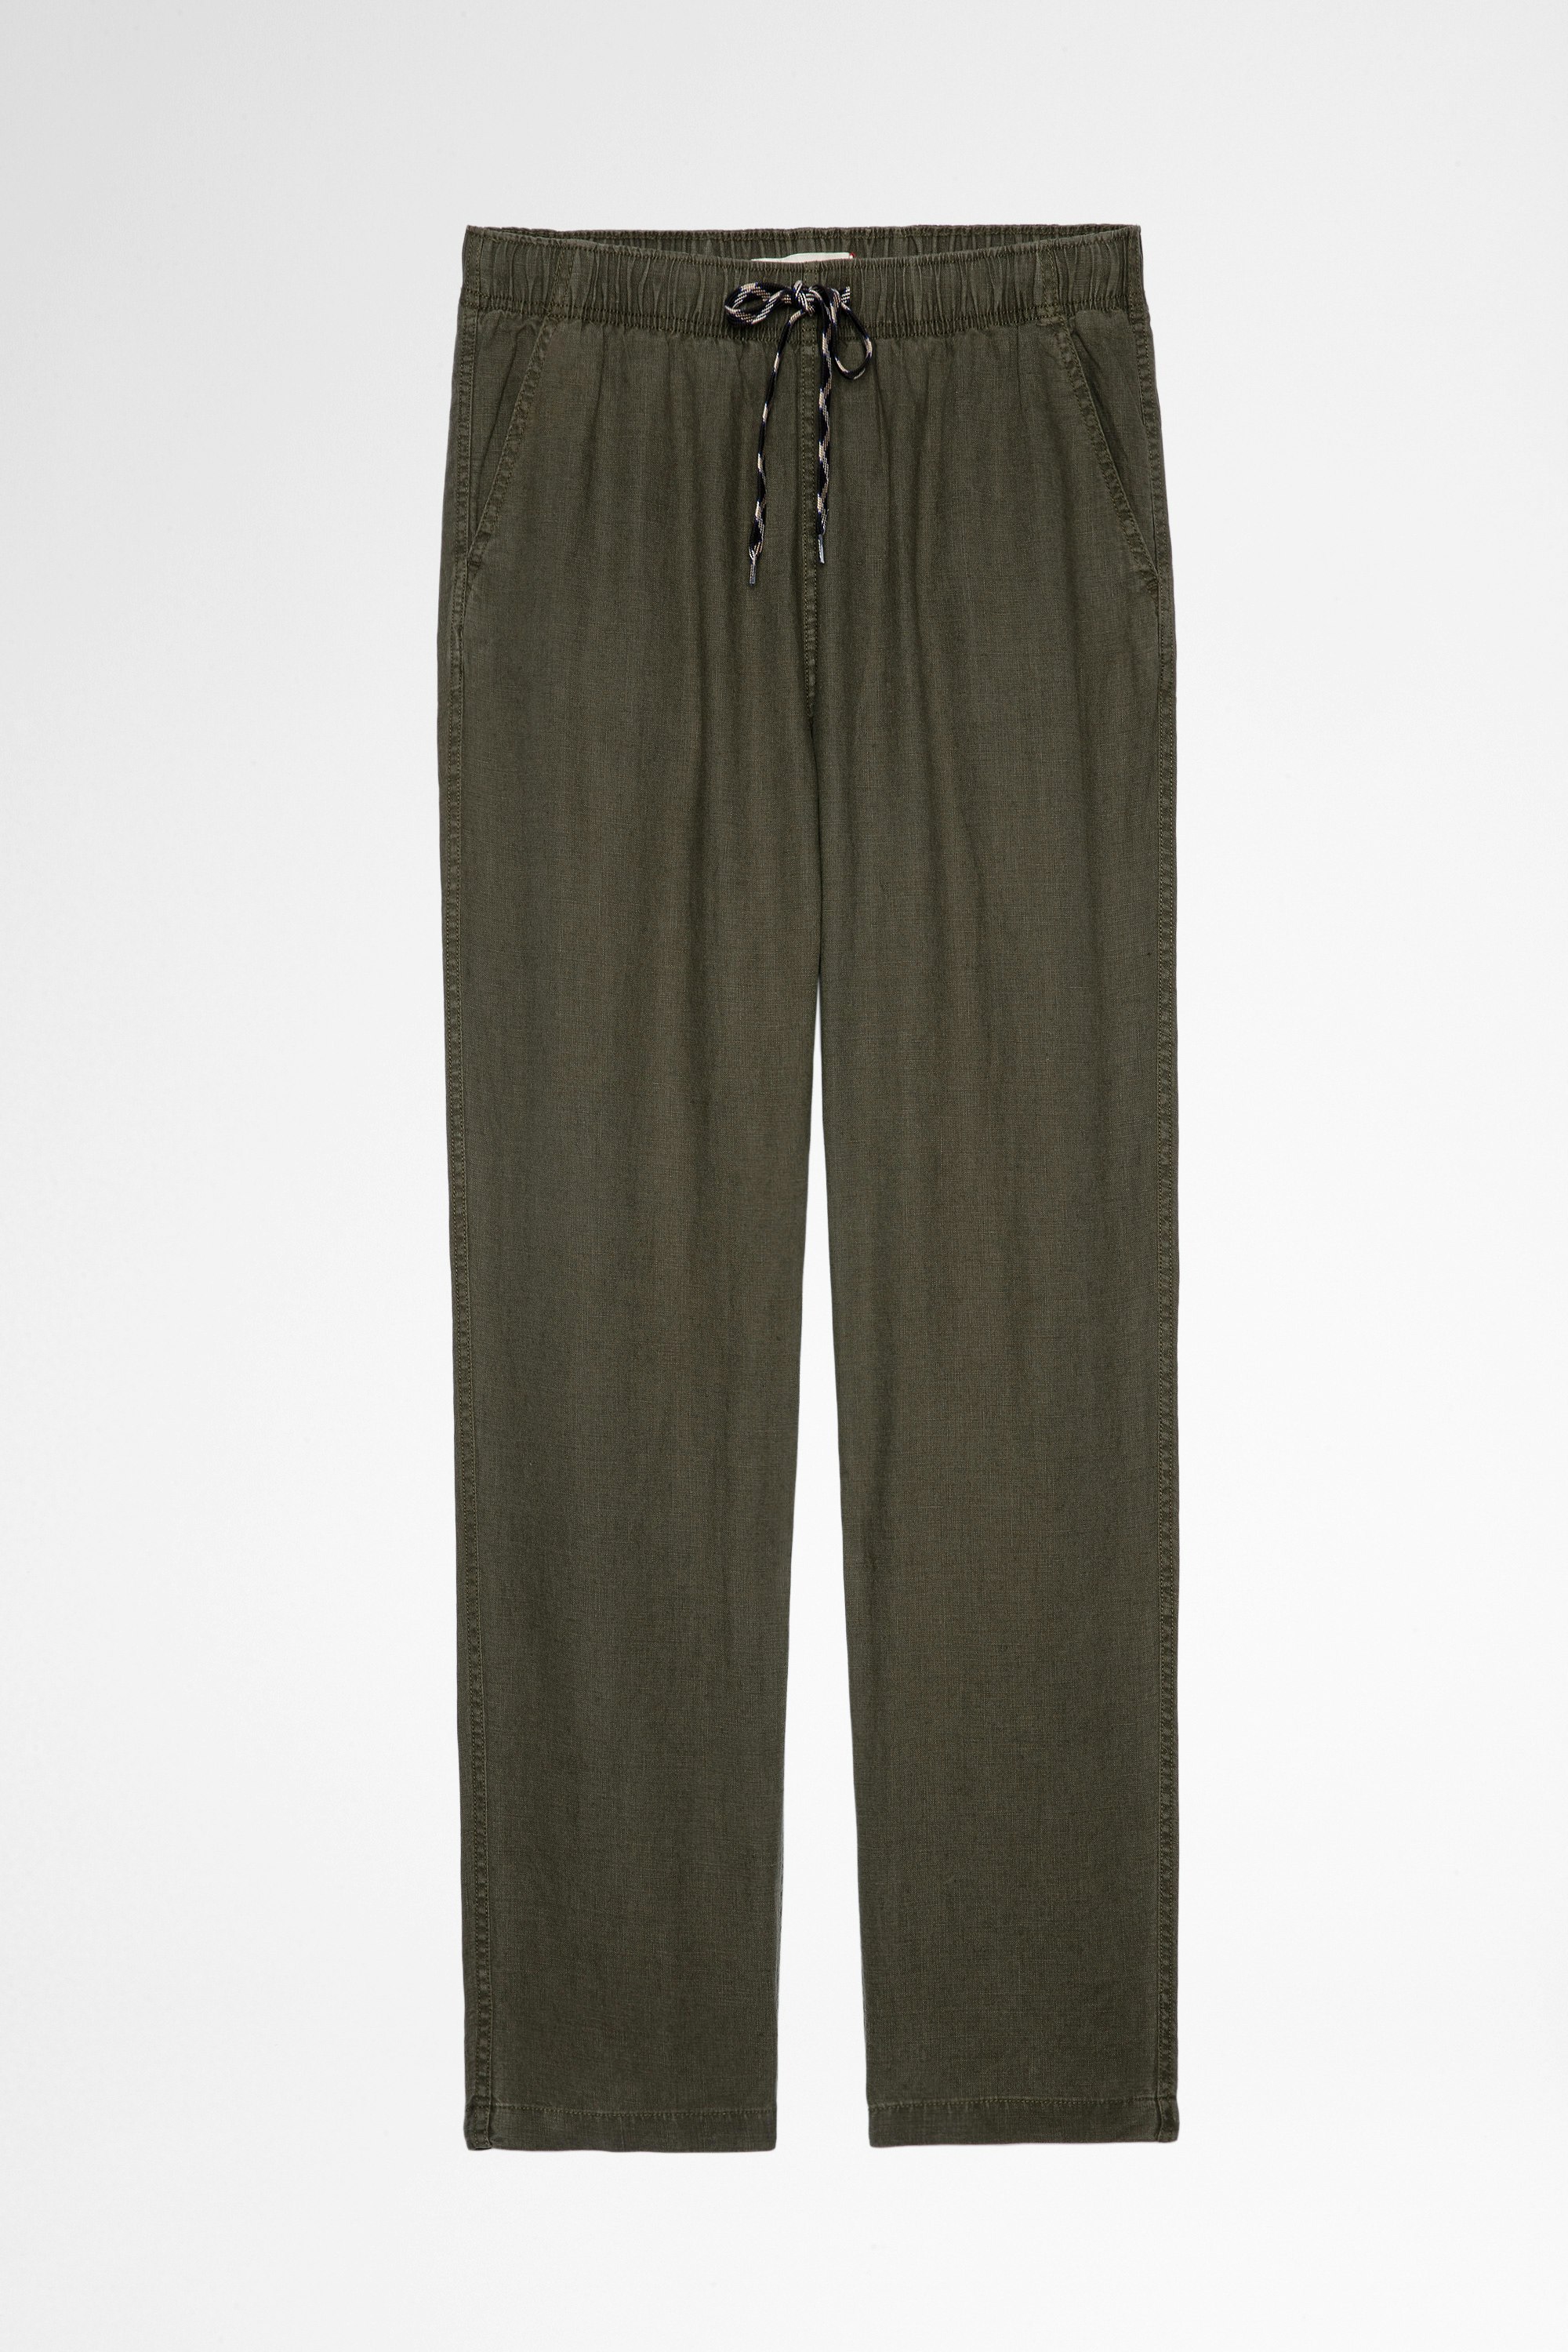 Linen Pixel Trousers Men's khaki linen trousers